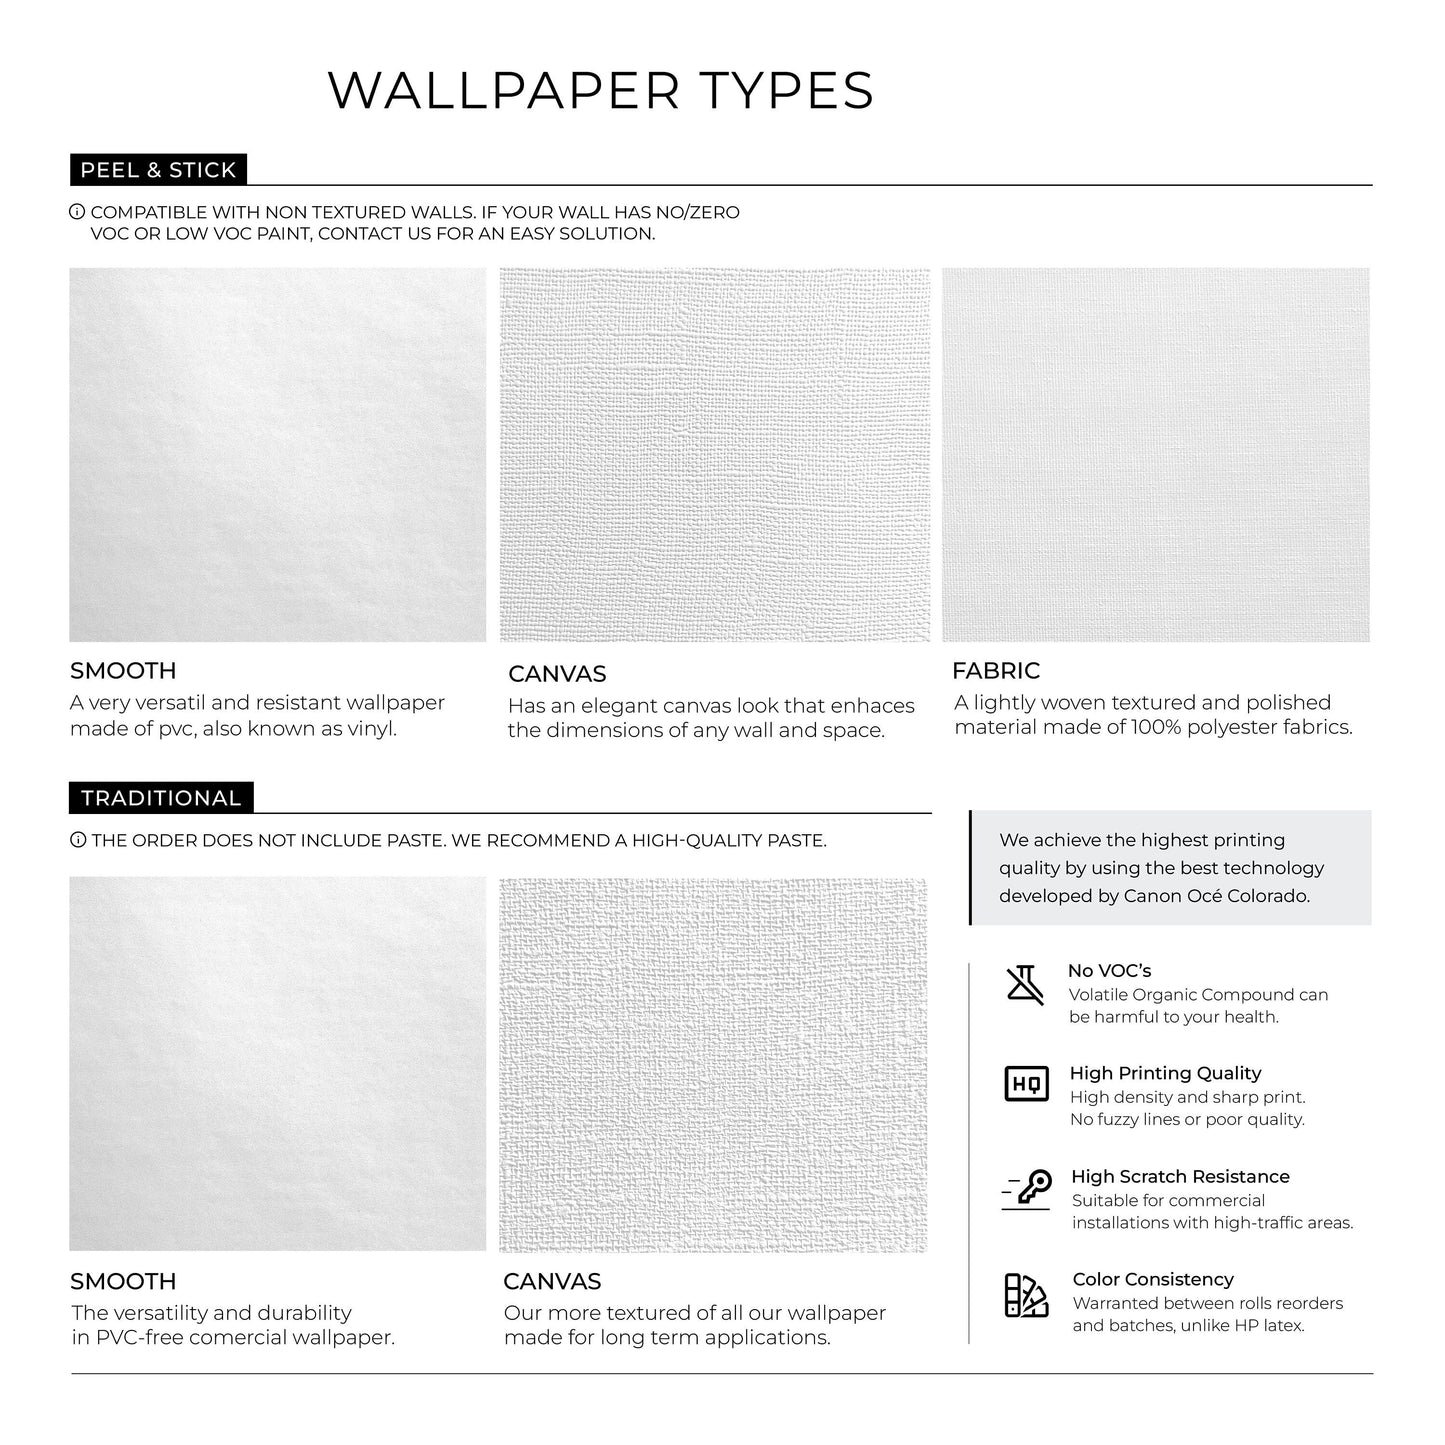 Tropical Floral Wallpaper, Removable Wallpaper, Self-adhesive Wallpaper, Monstera Wallpaper, Temporary Wallpaper, Jungle Wallpaper - A845